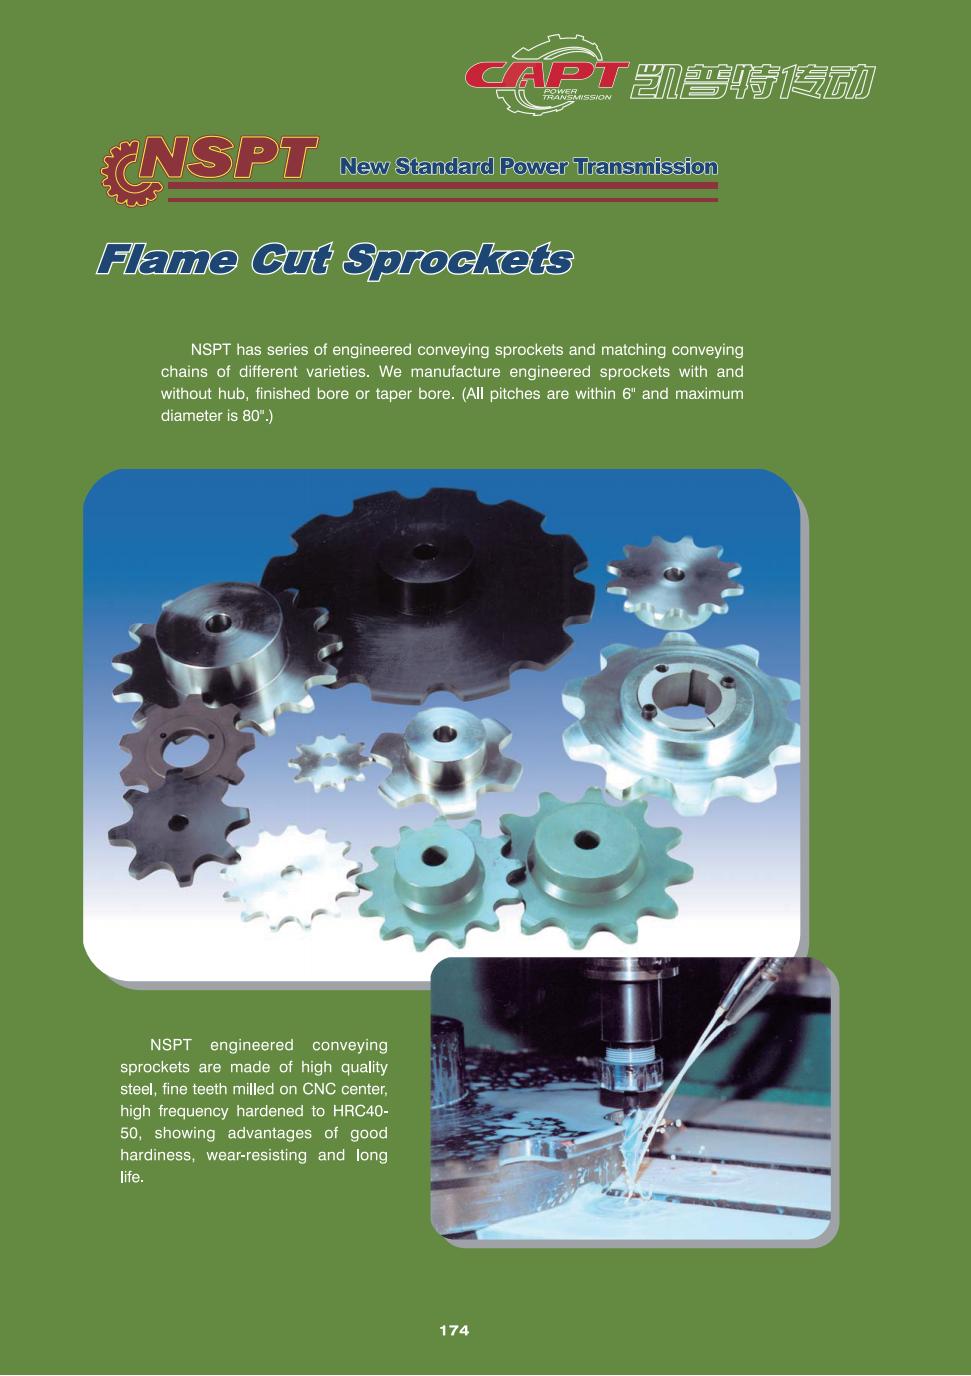 7-Flame Cut Sprockets